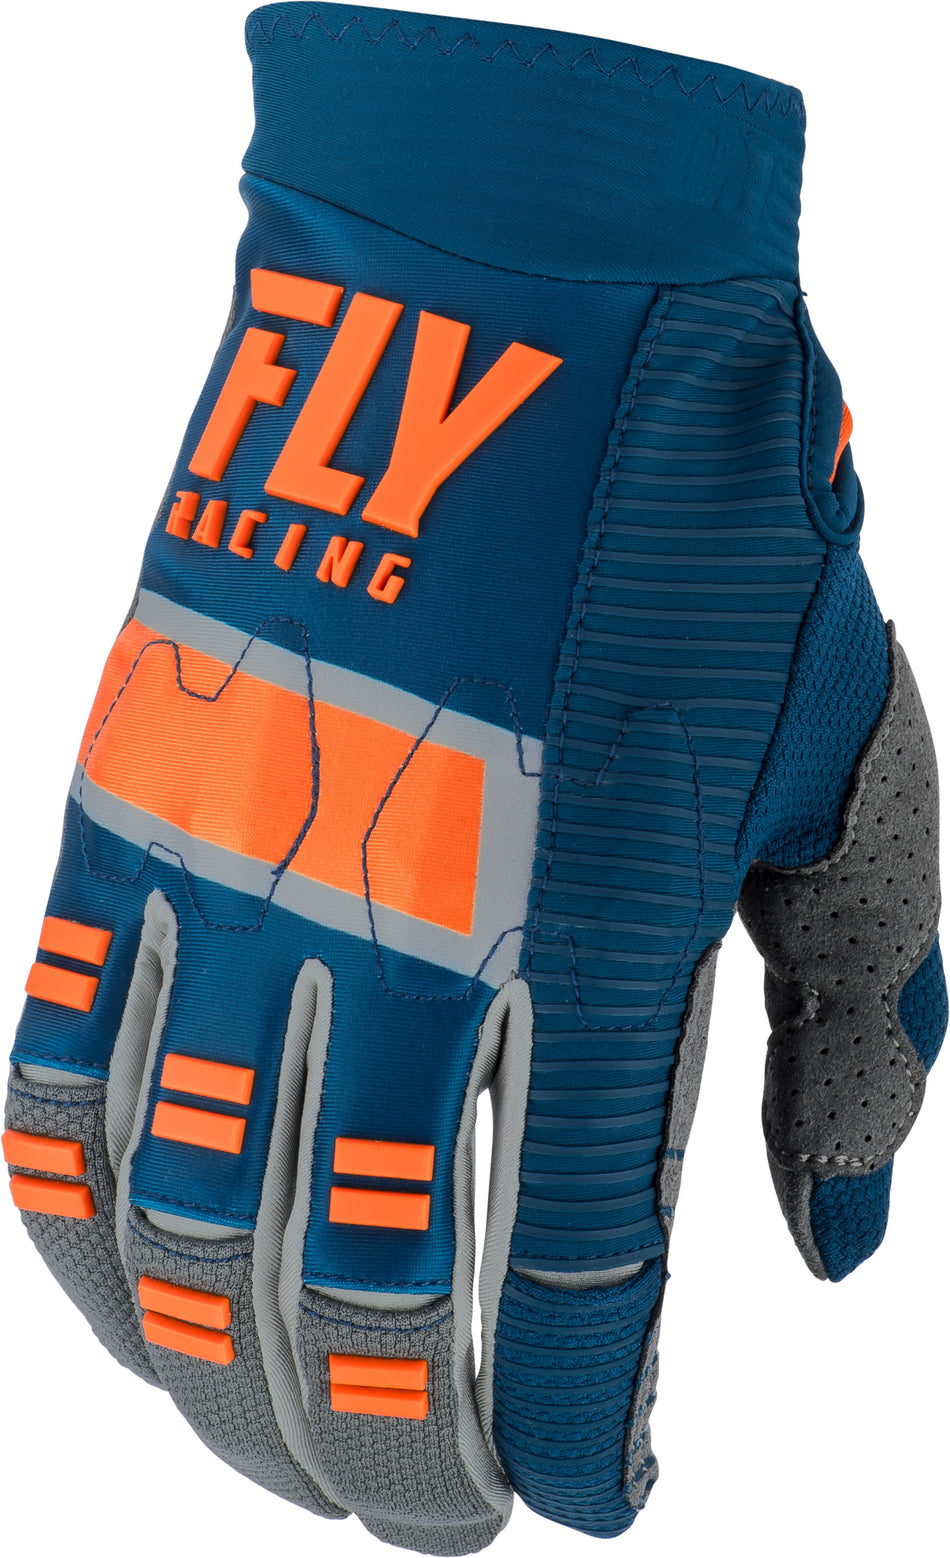 FLY RACING Evolution Dst Gloves Navy/Grey/Orange Sz 13 372-11113